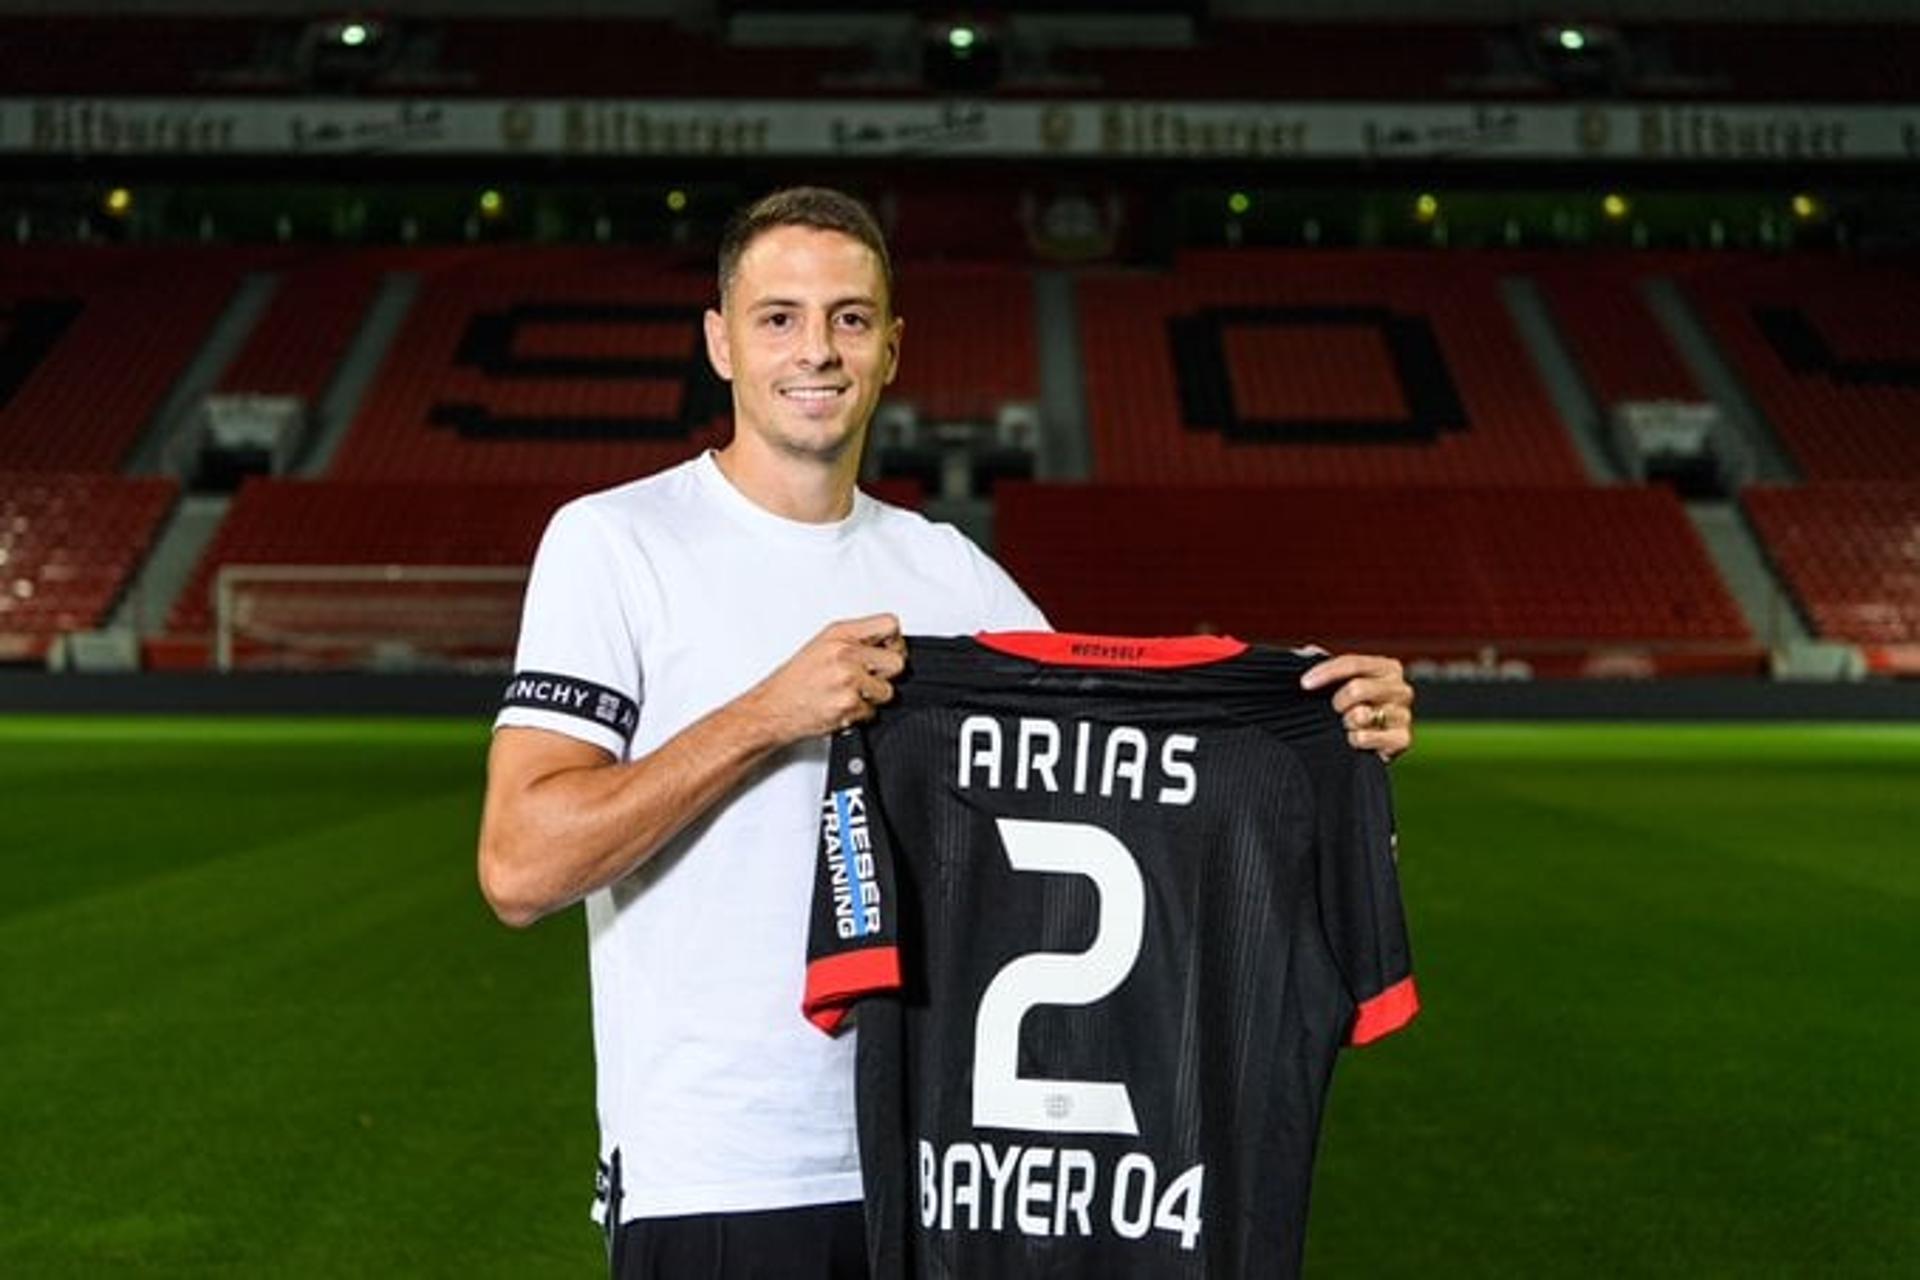 Santiago Arias, Bayer Leverkusen